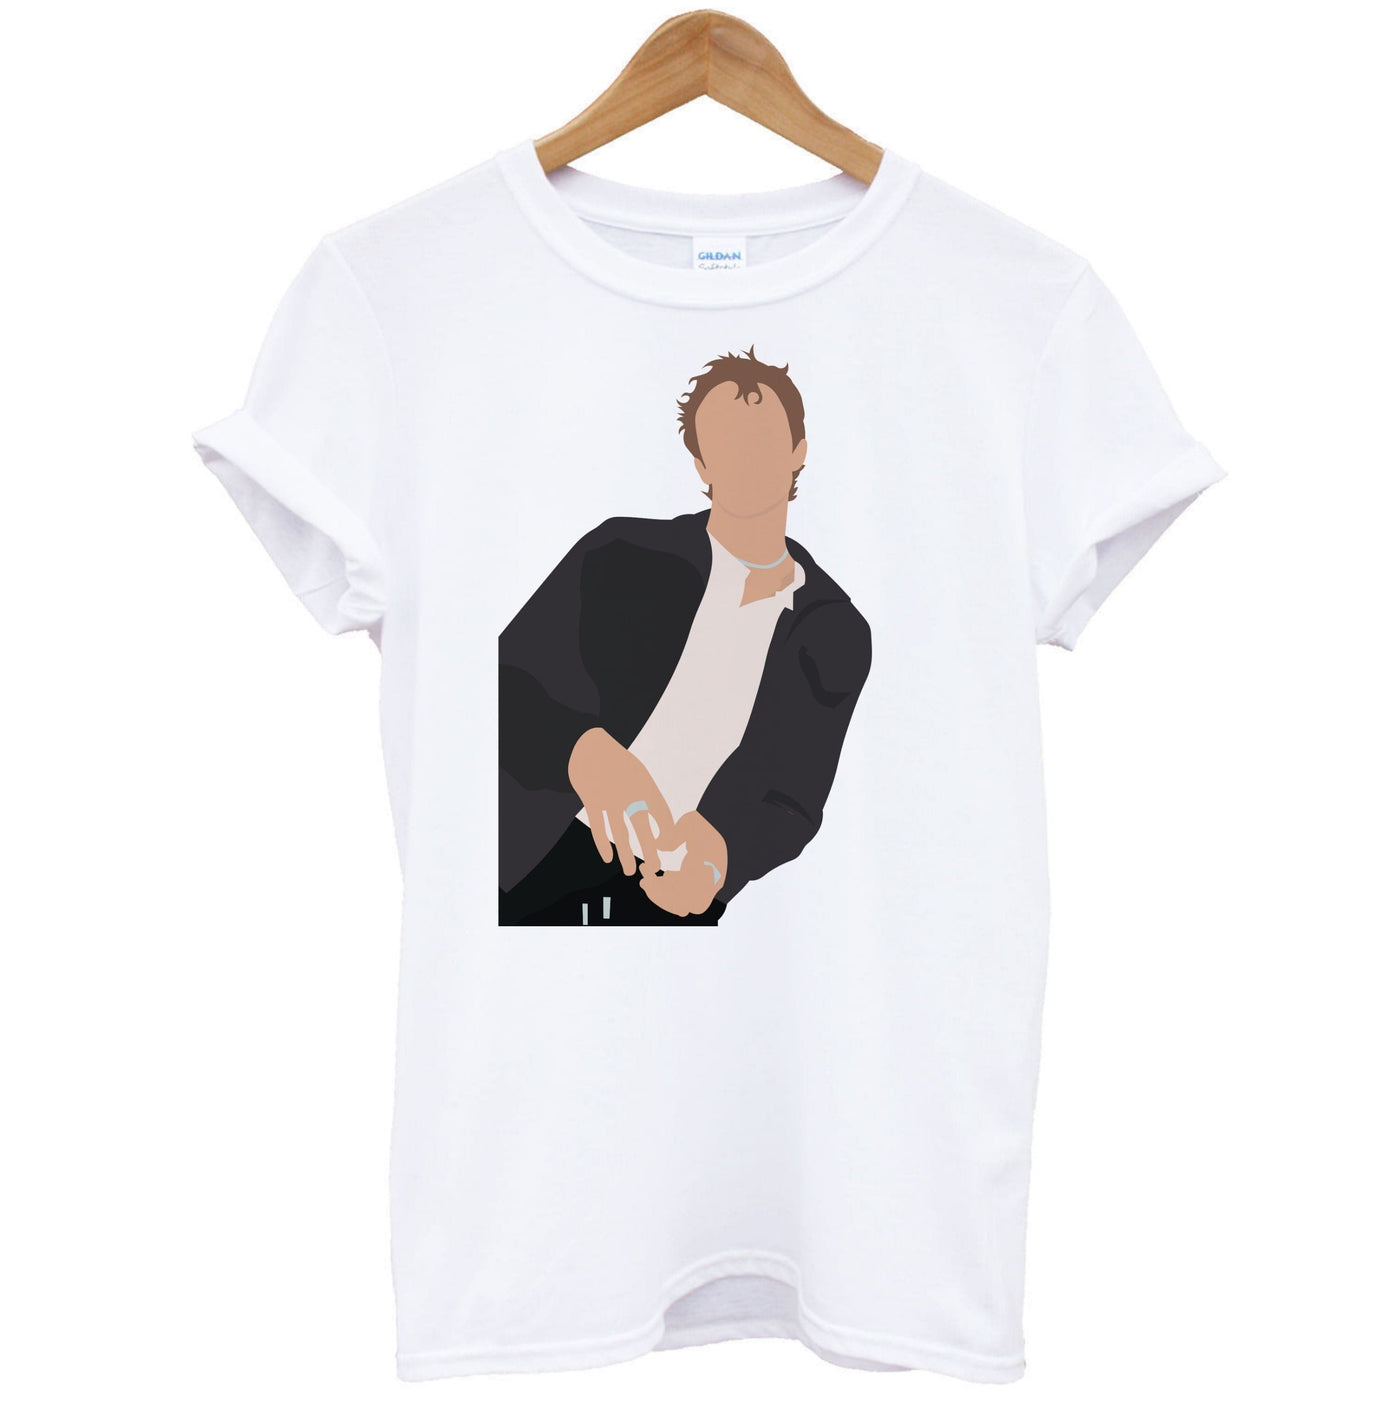 Rafe Cameron - Outer Banks T-Shirt